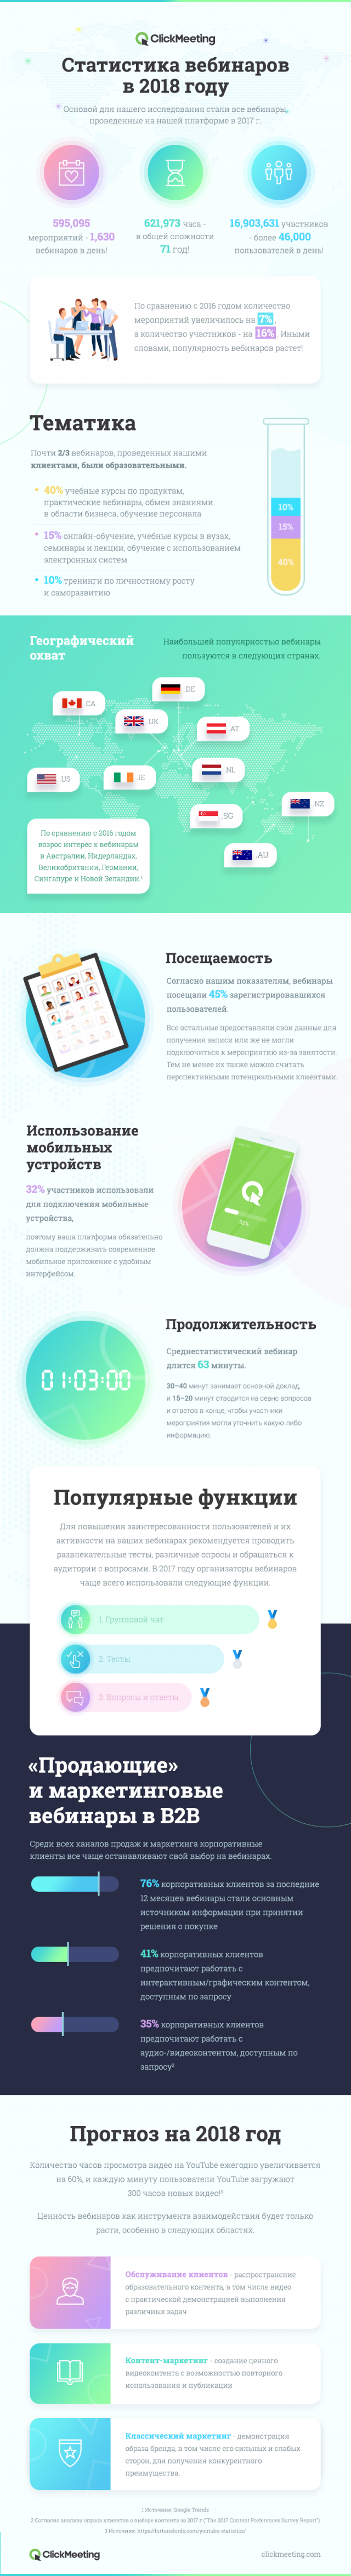 clickmeeting_state_of_webinars_2018_benchmark_infographic_ru